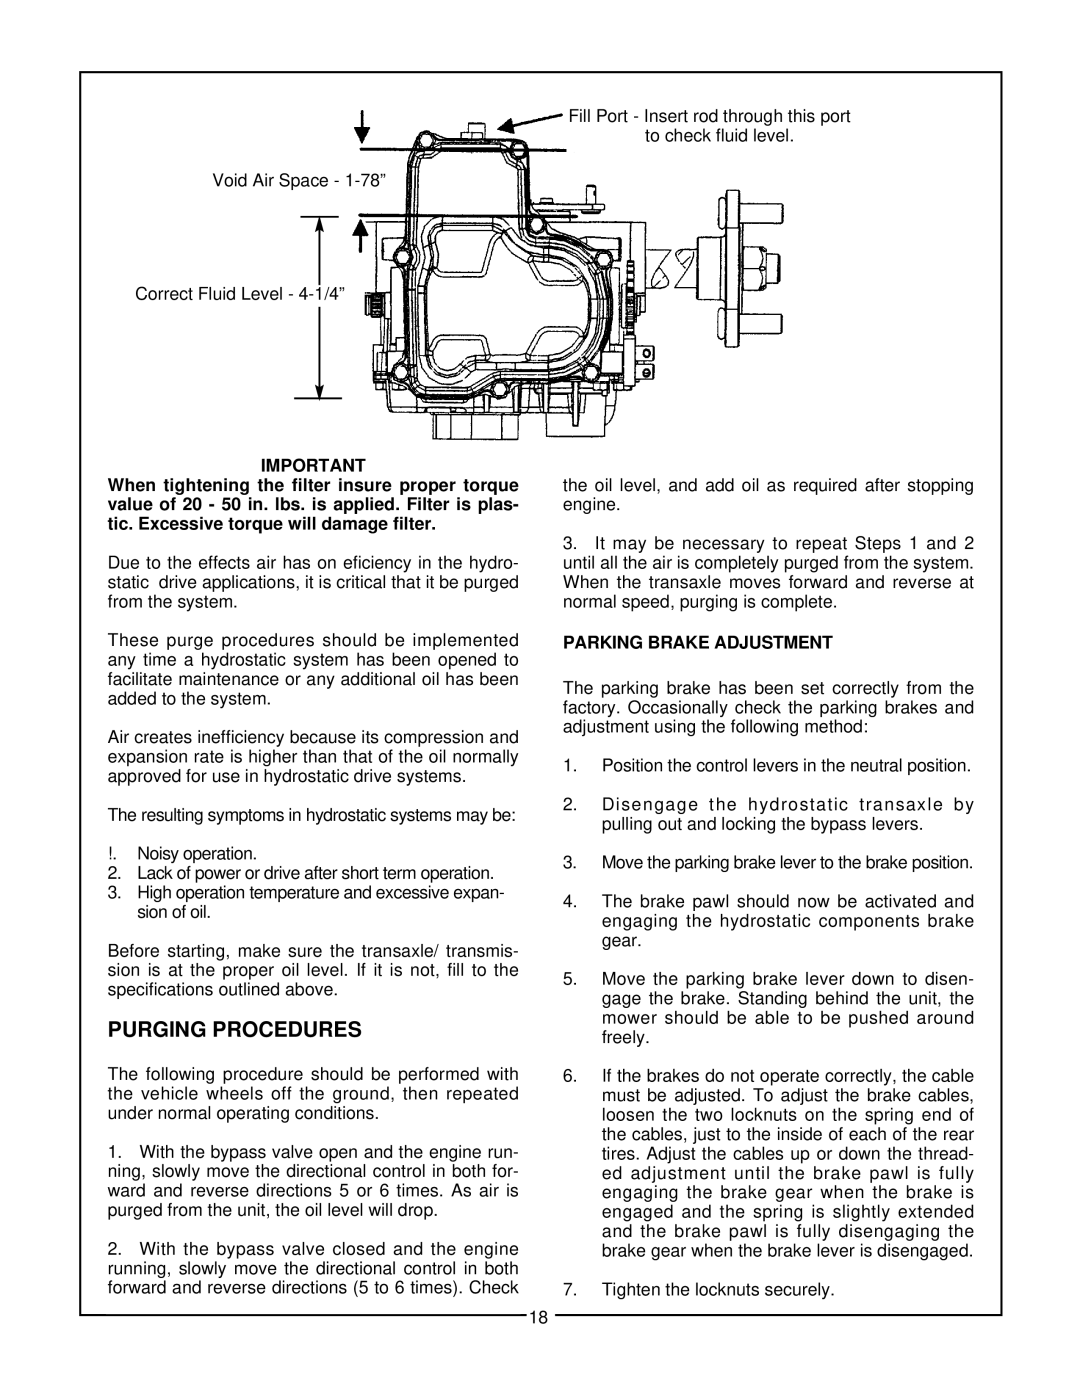 Bush Hog Estate Series manual Purging Procedures, Parking Brake Adjustment 